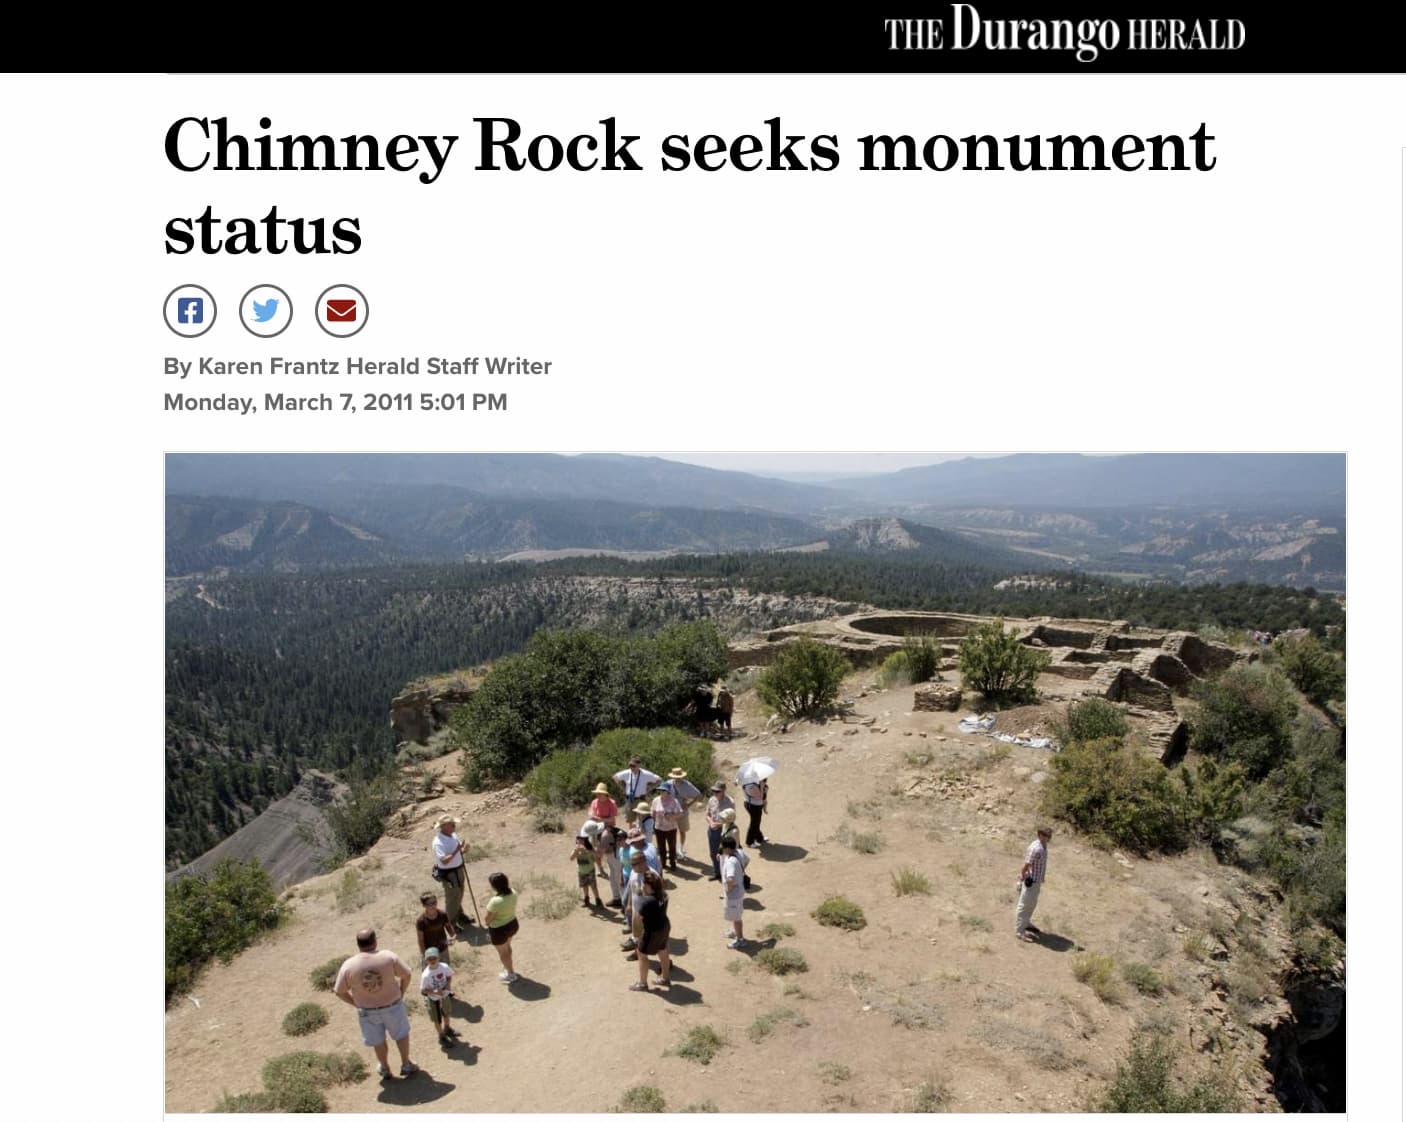 Chimney Rock Seeks Monument Status by Karen Frantz